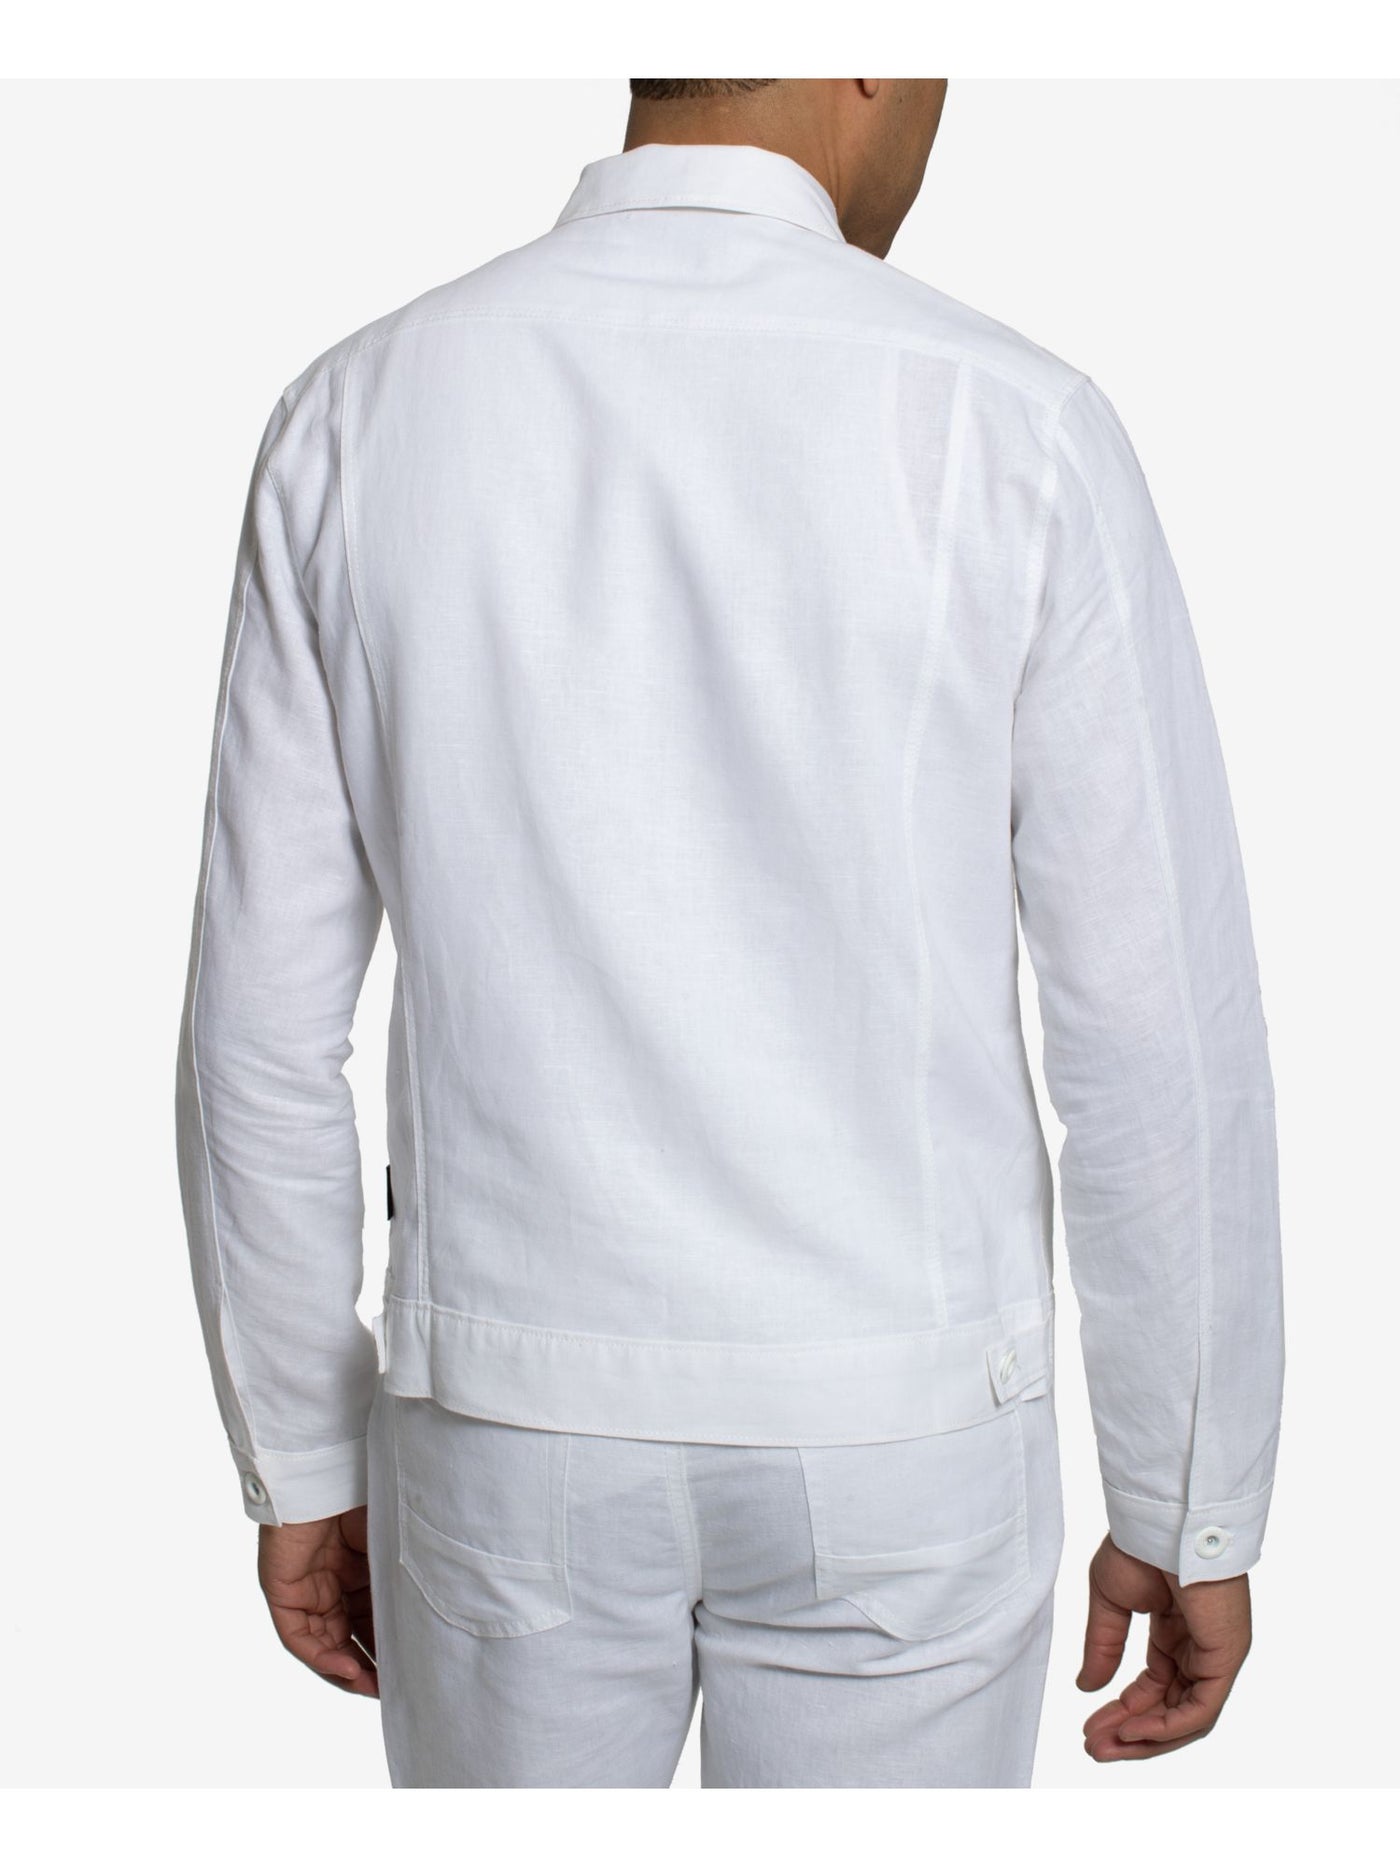 SEANJOHN Mens White Spread Collar Button Down Cotton Blend Cotton Blend Shirt 4XL